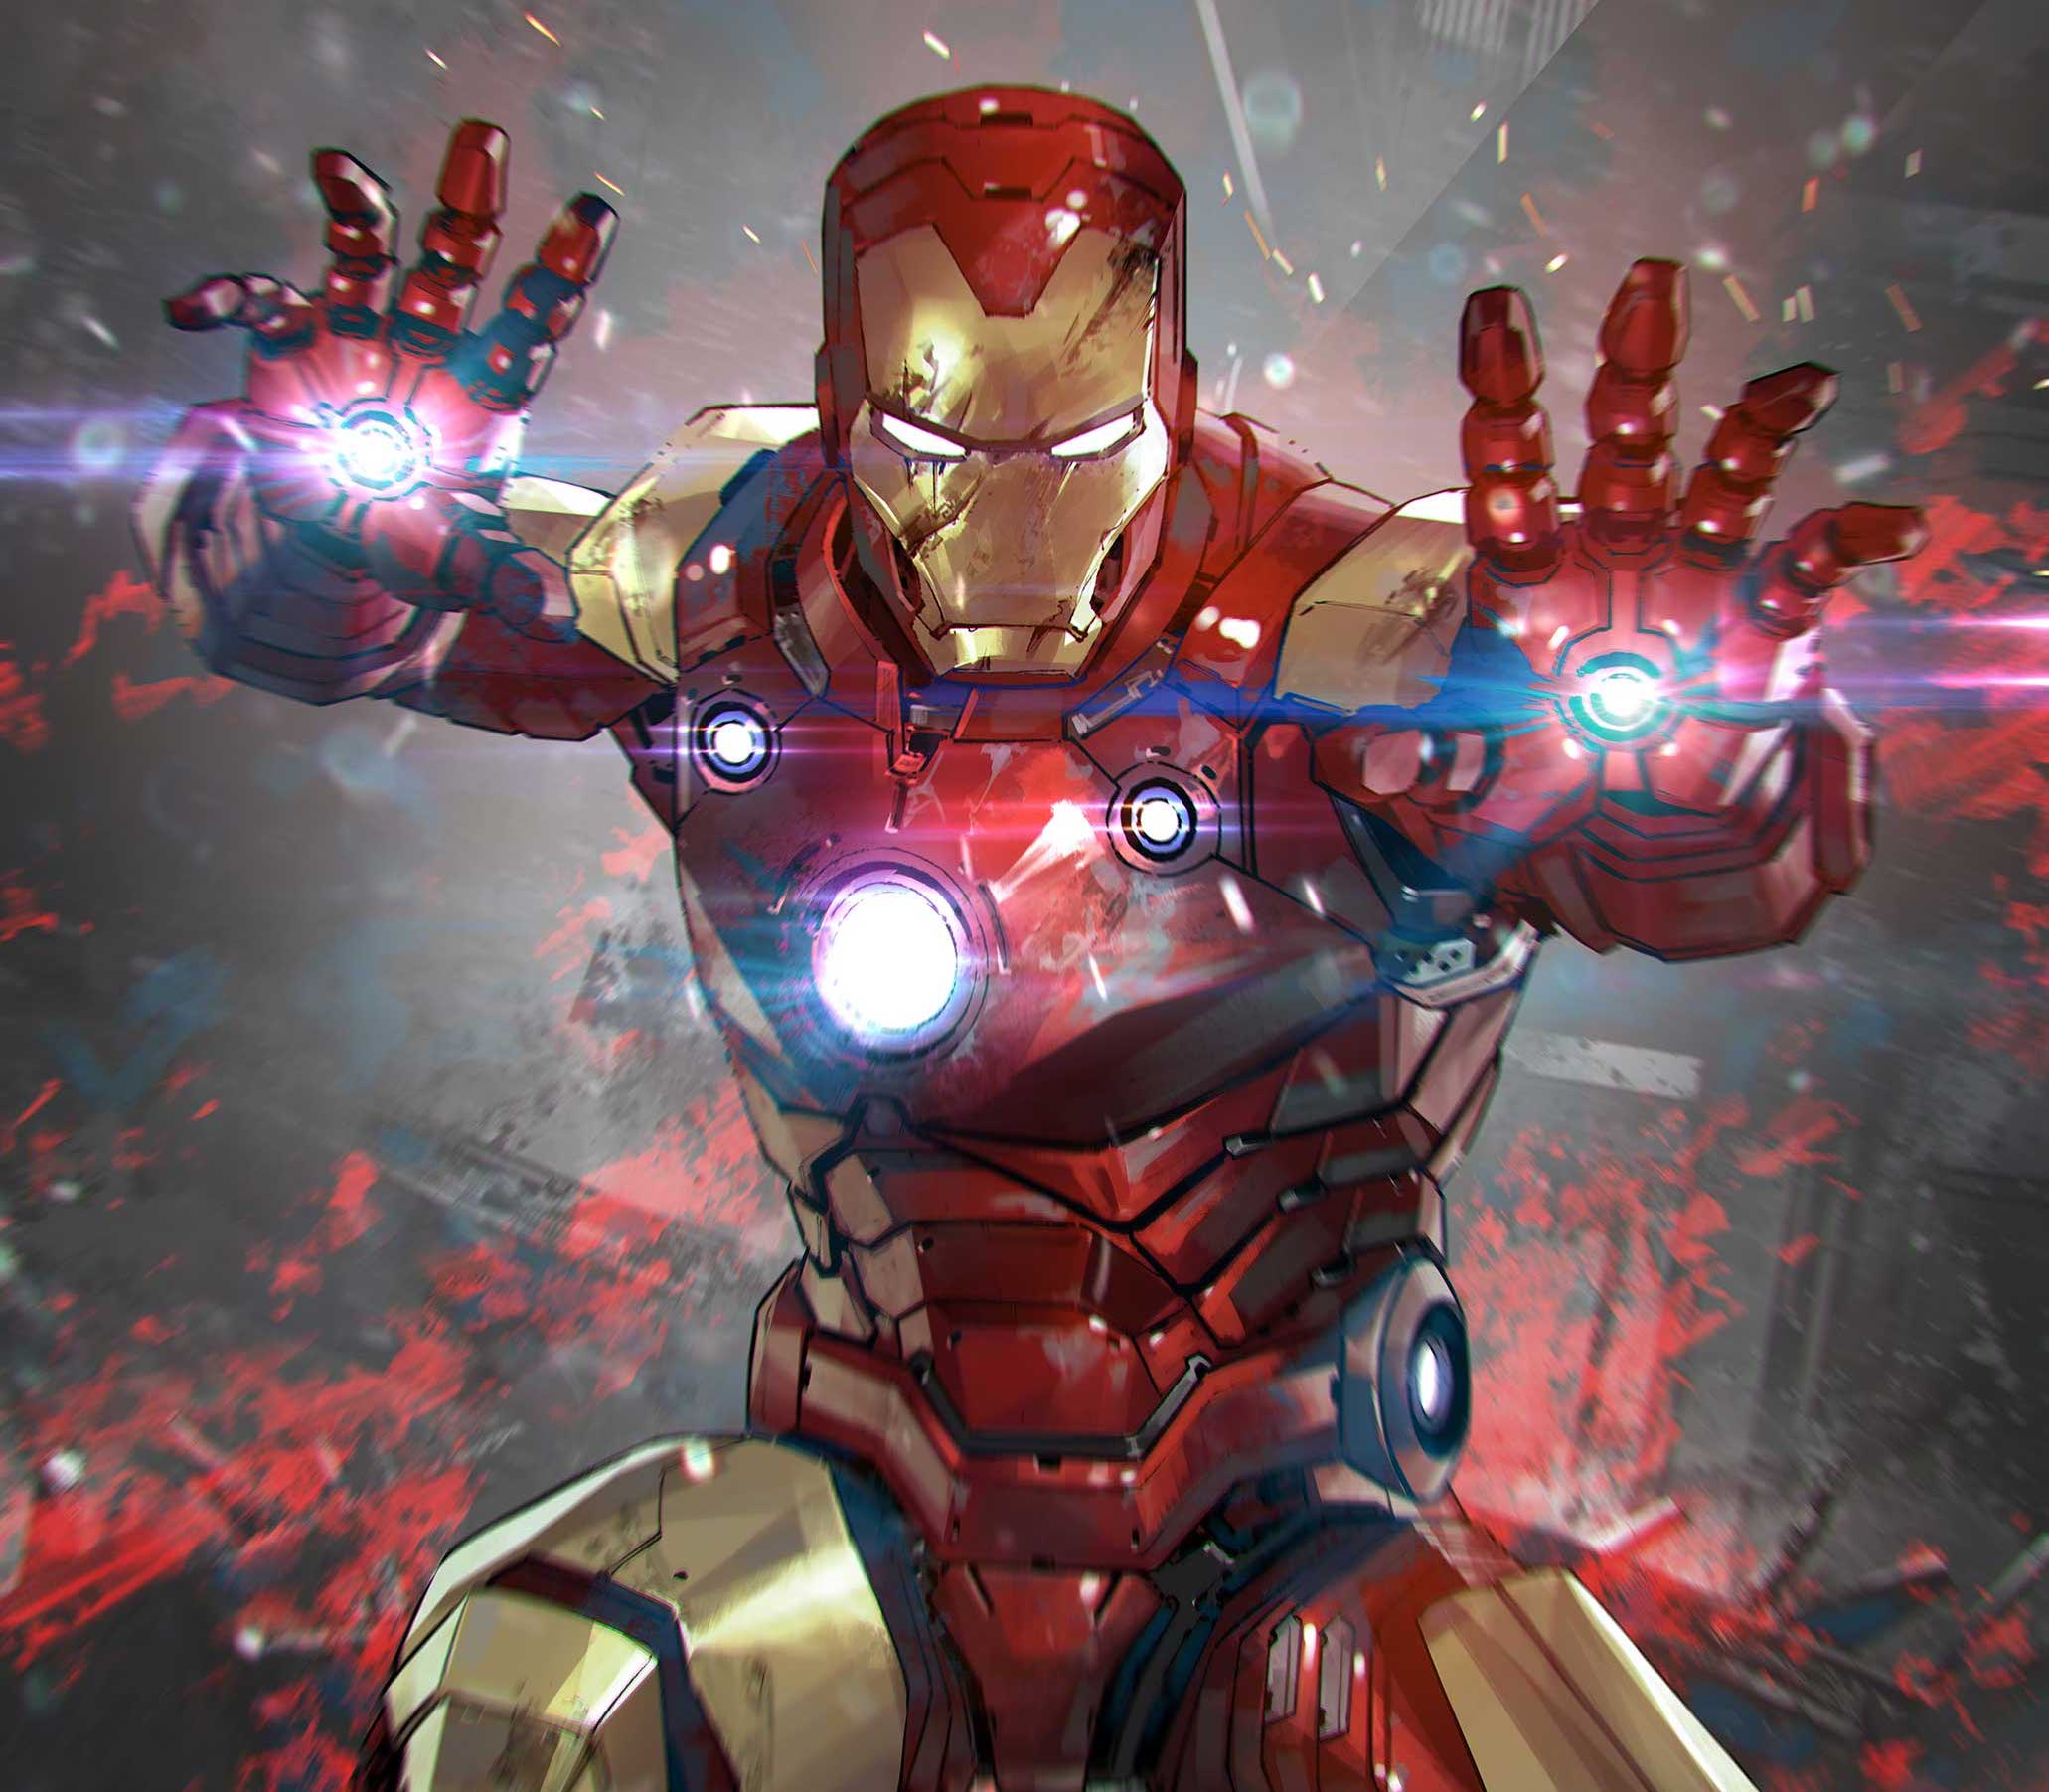 Gerry Duggan and Juan Frigeri launch new ongoing series 'Invincible Iron Man' #1 this December